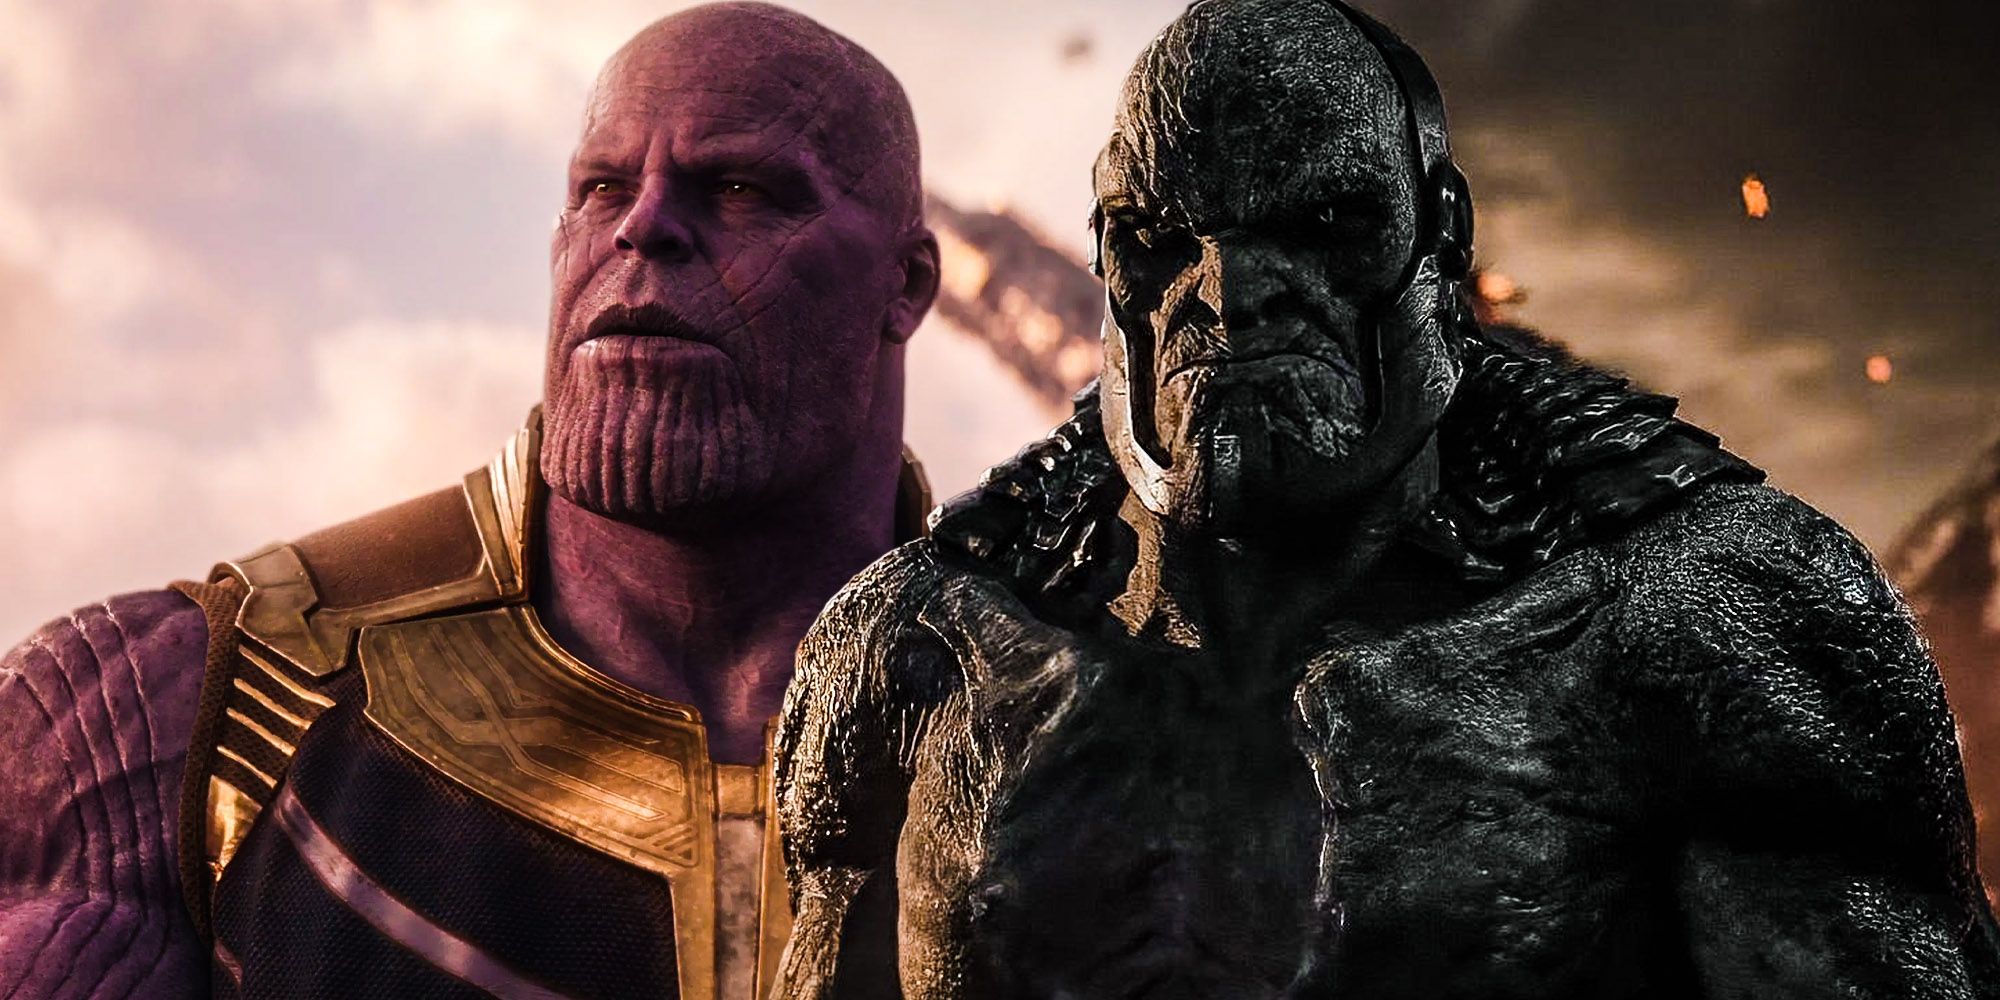 Darkseid vs thanos Justice league snyder cut Avengers infinity war